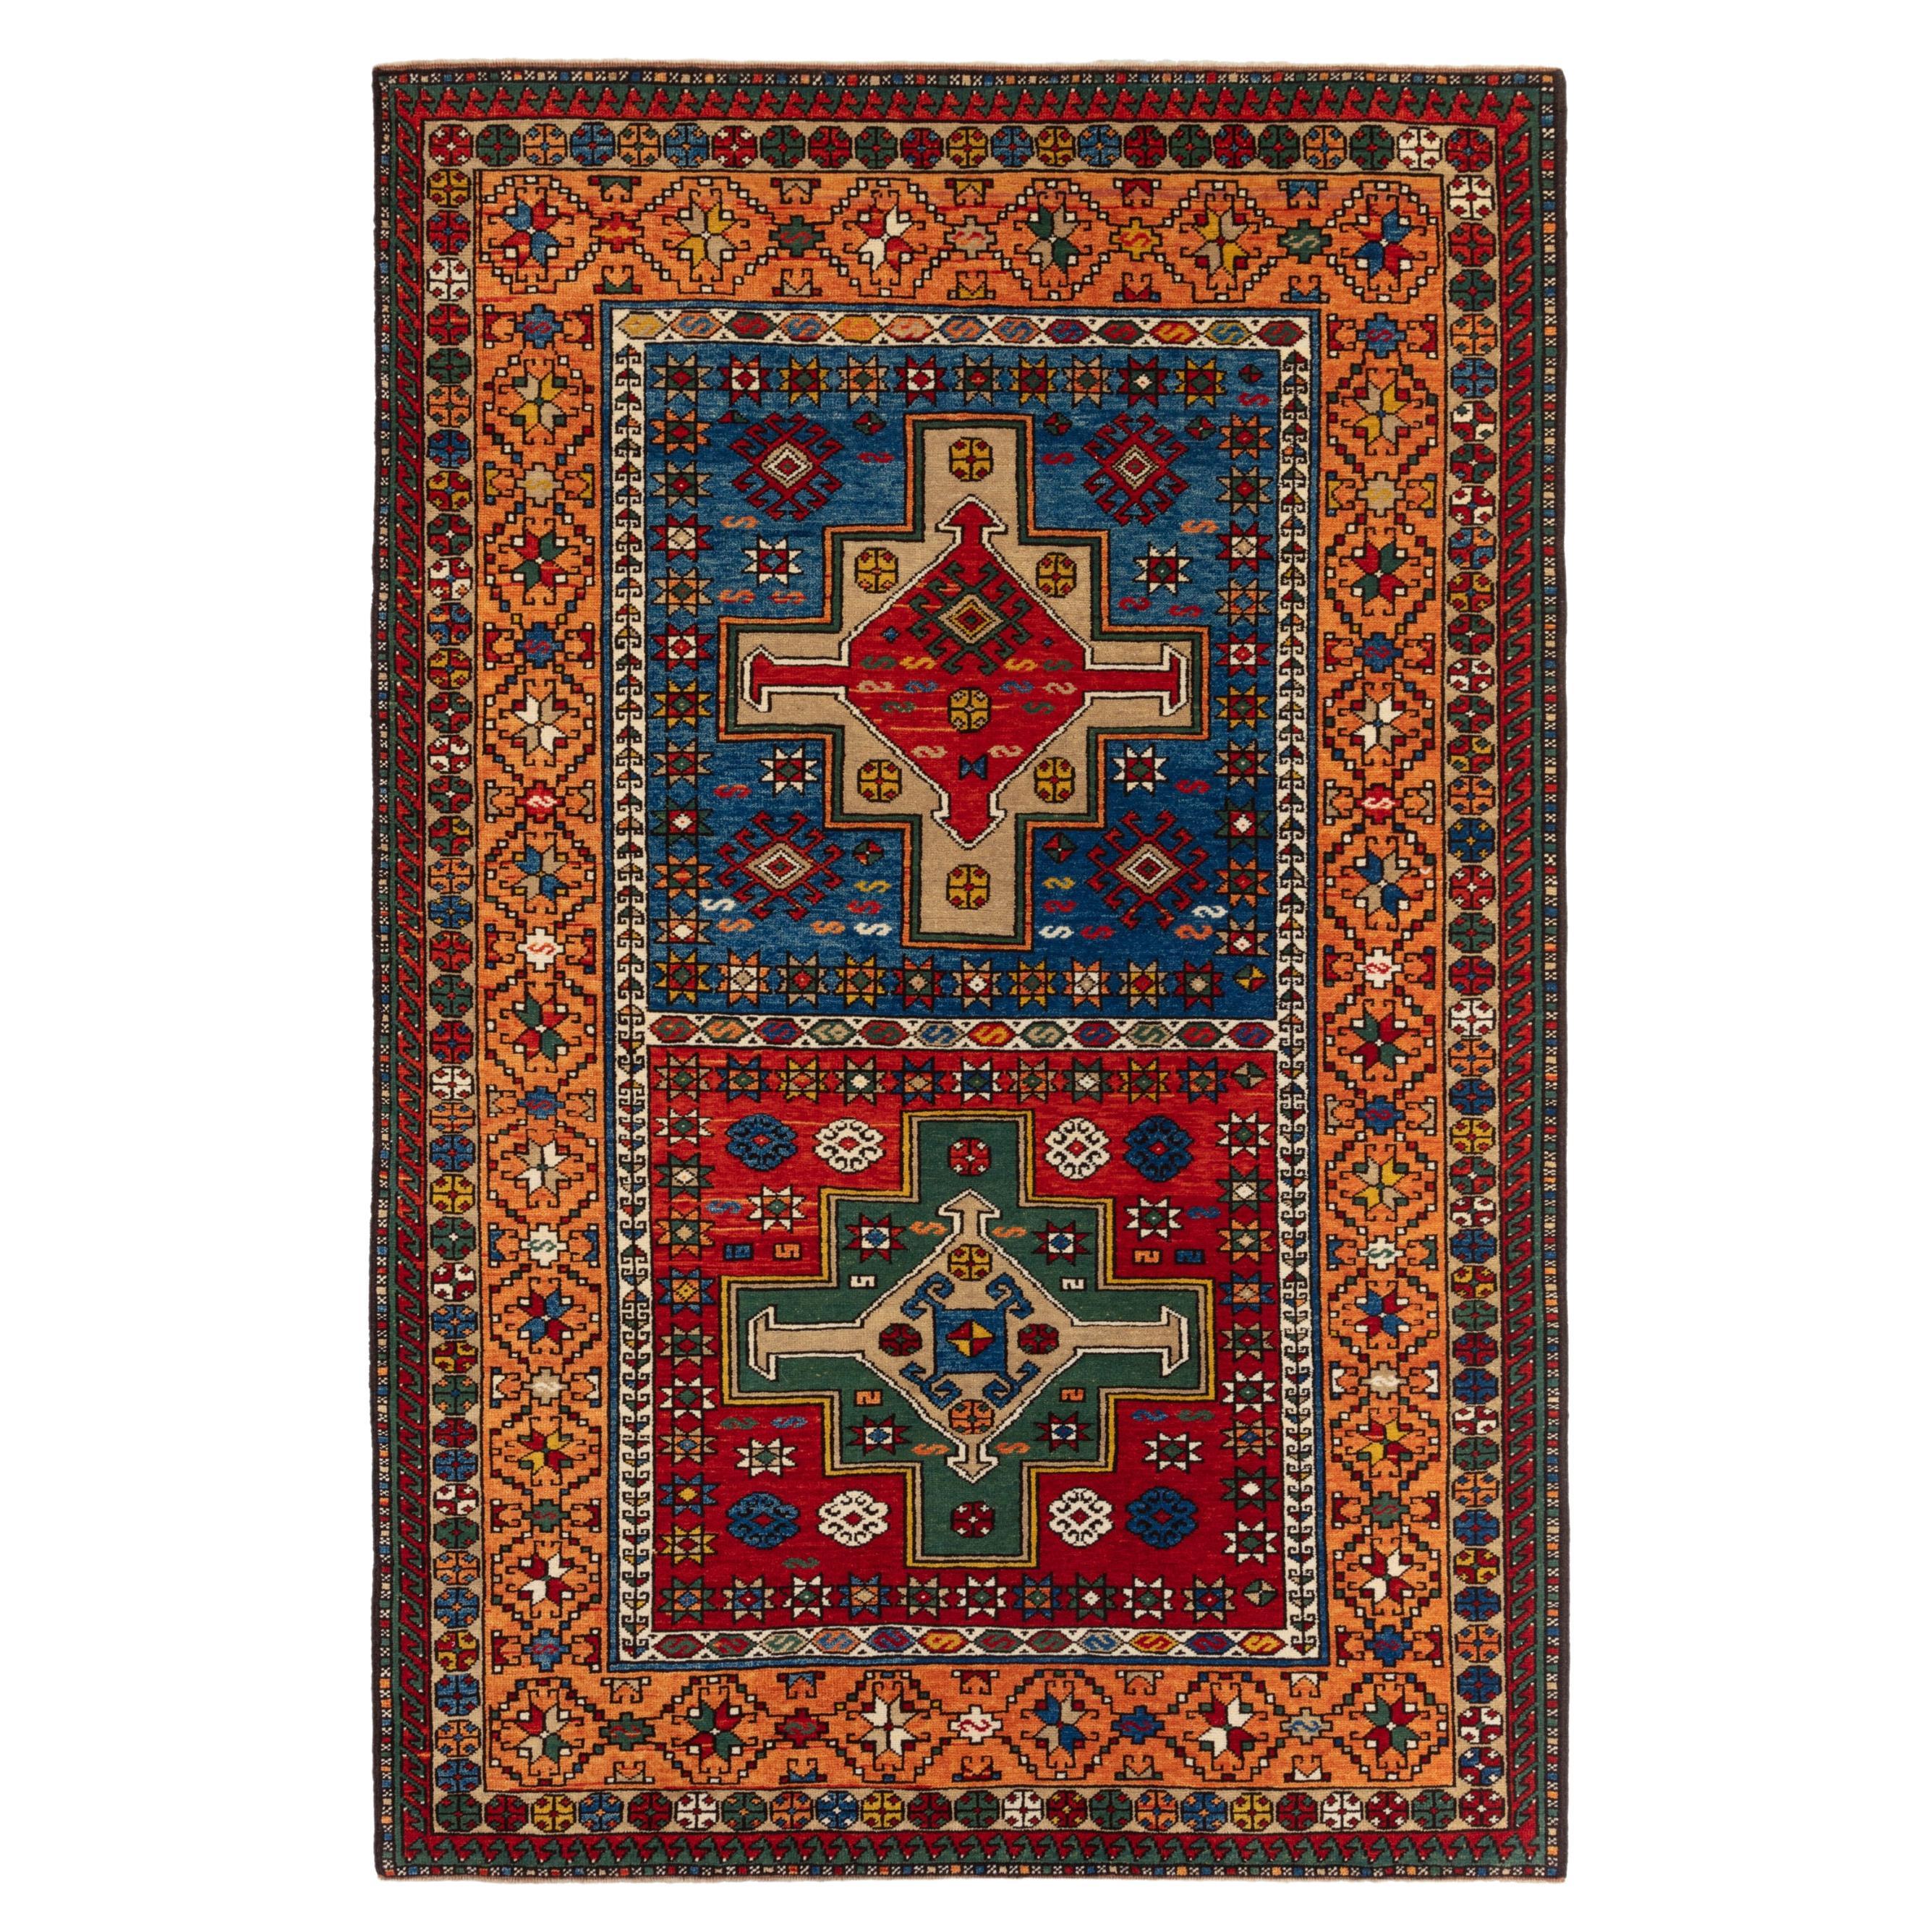 Ararat Rugs Two Medallions Kagizman Kazak Rug Antique Revival Carpet Natural Dye For Sale